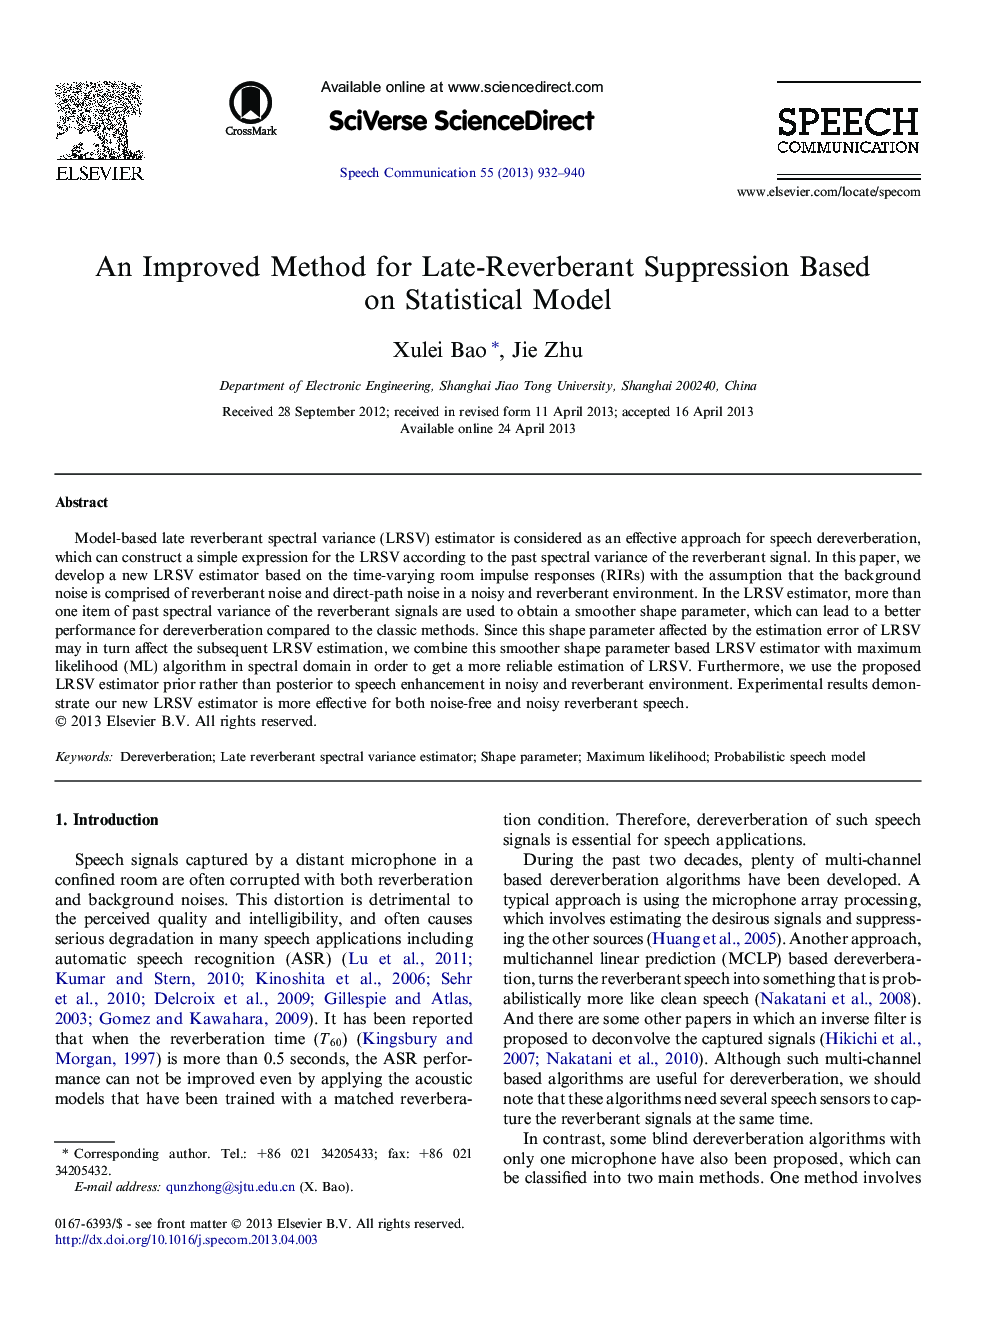 An Improved Method for Late-Reverberant Suppression Based on Statistical Model